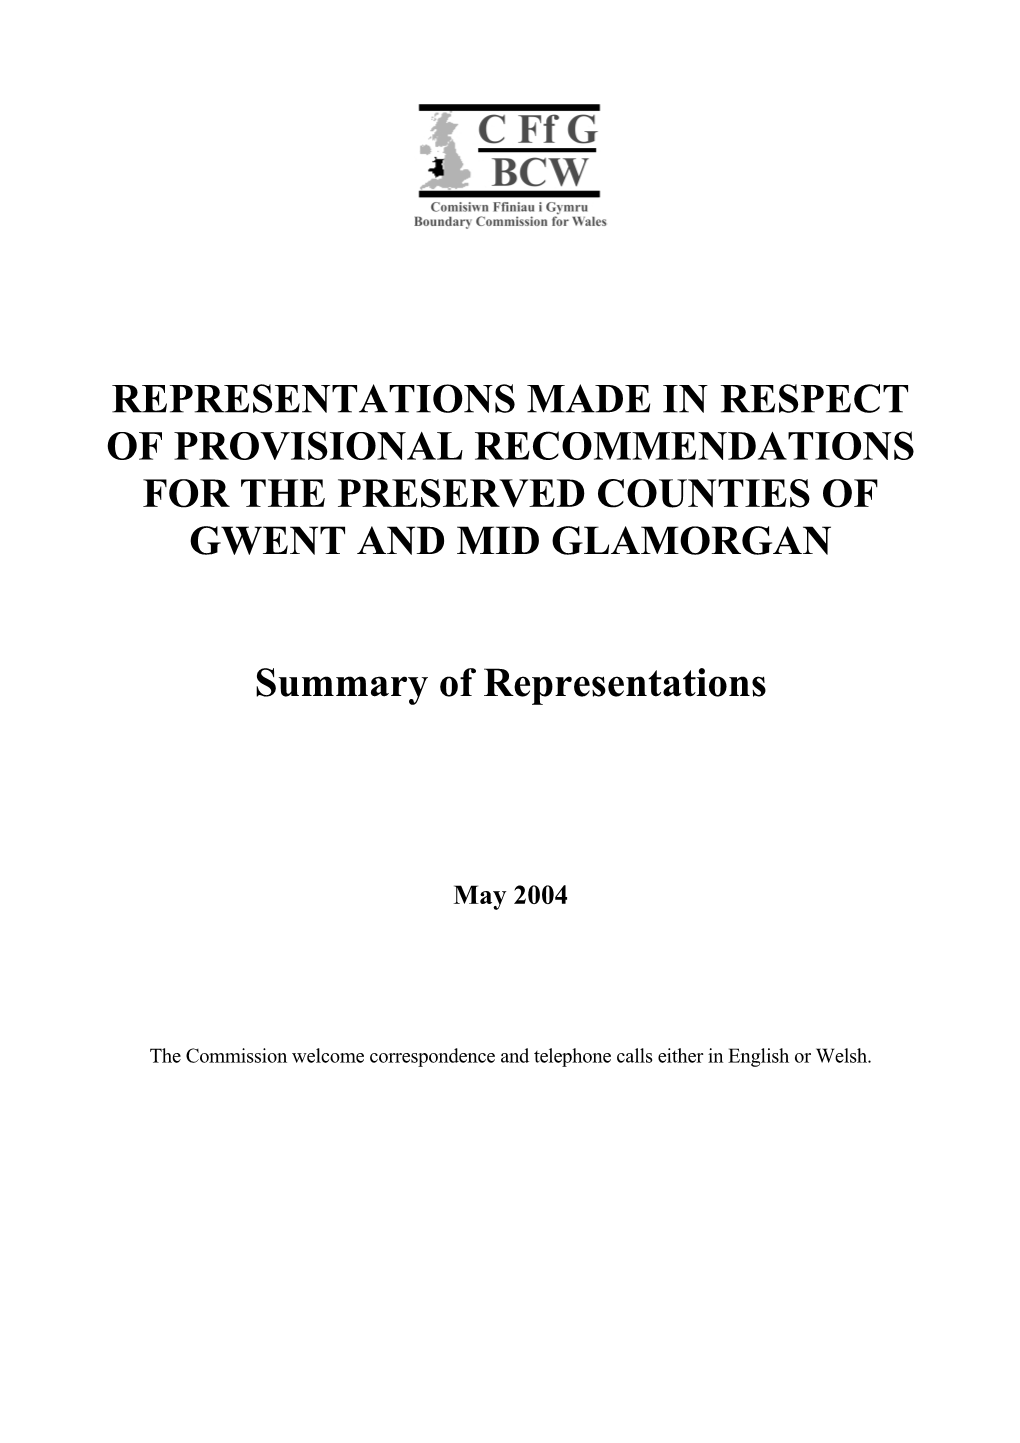 Gwent and Mid Glamorgan Summary